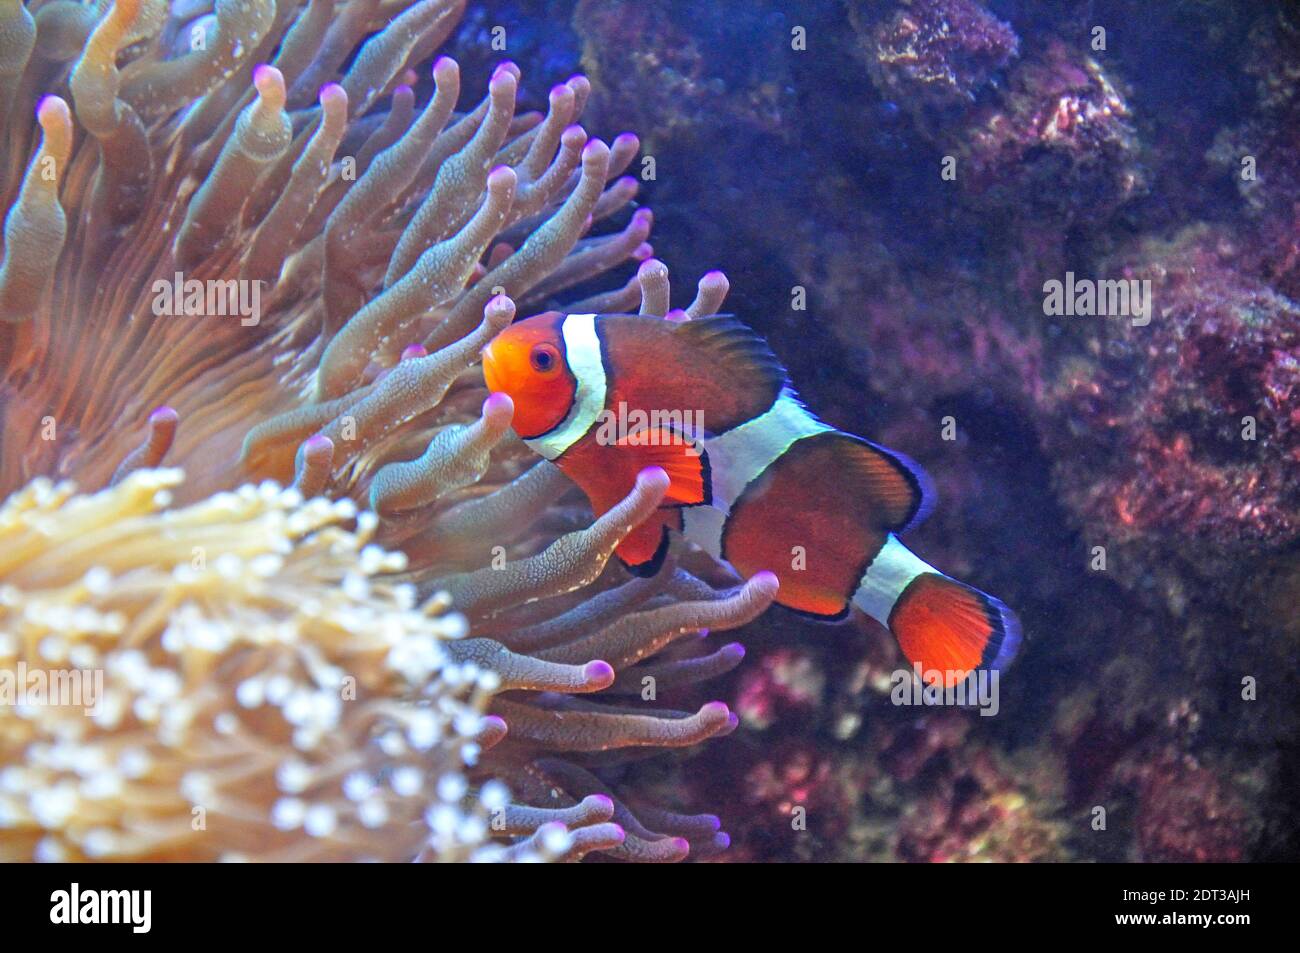 Ocellaris Clownfish (Amphiprion ocellaris) amongst sea anemones in coral reef, Cebu, Visayas, Philippines Stock Photo